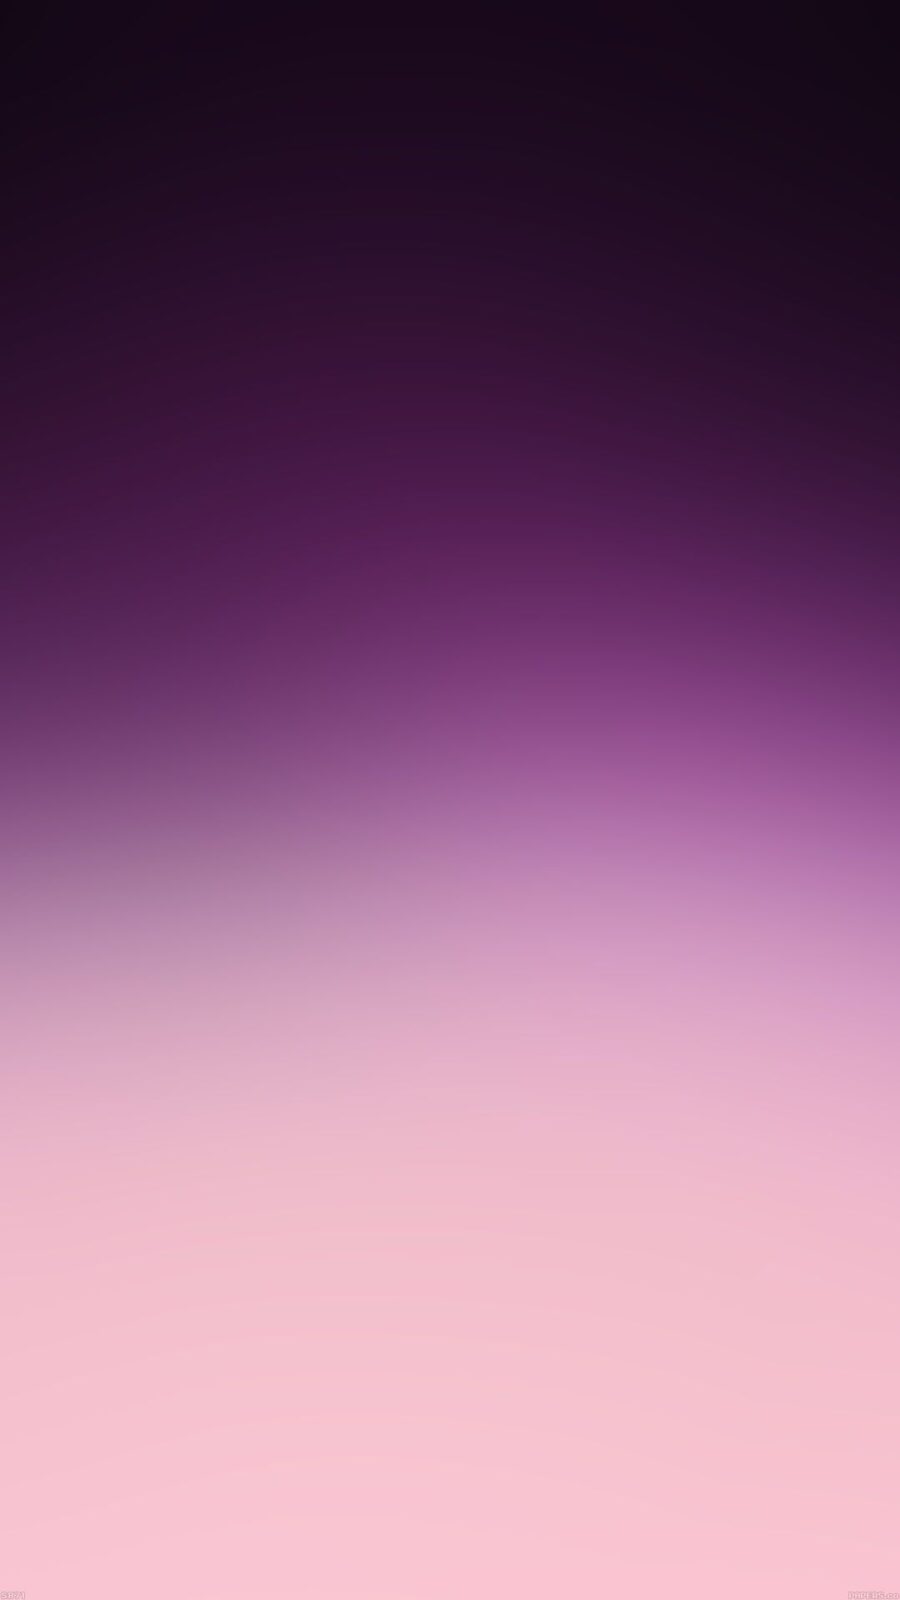 wallpaper-blur-flou-rose-apple-smartphone android-1